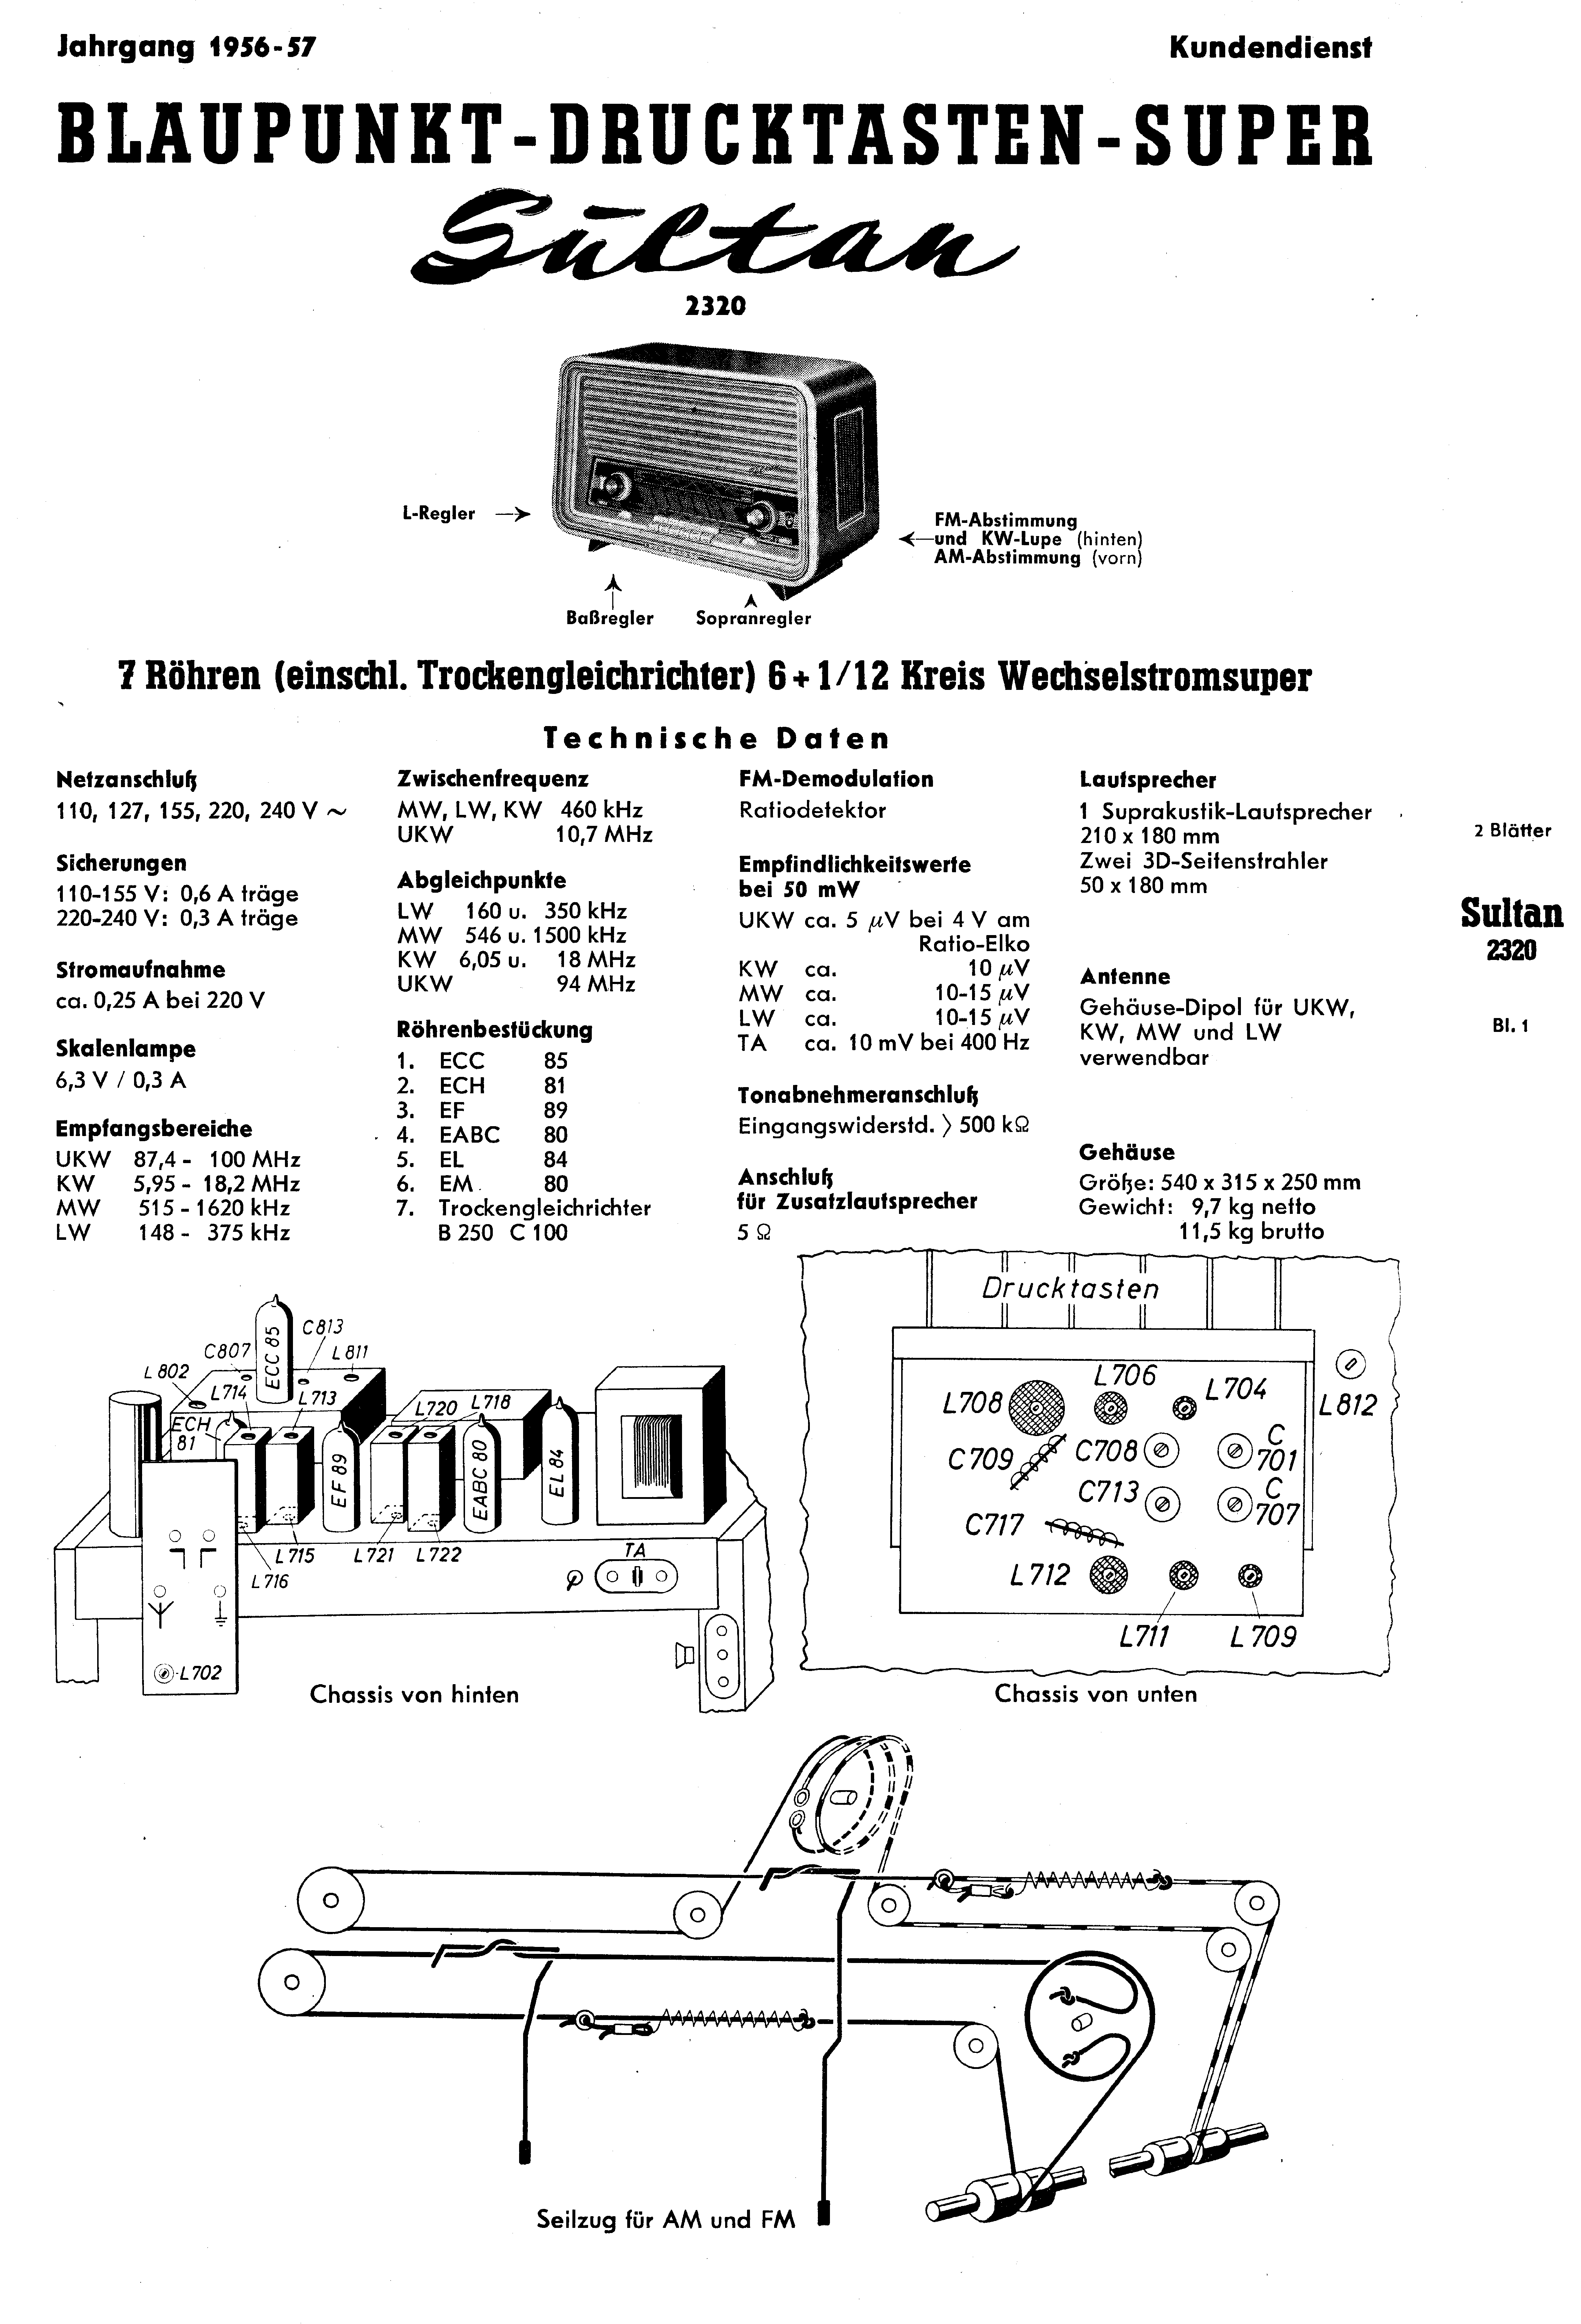 Blaupunkt Service Manual für Sultan-Stockholm 22200-22250  Copy 